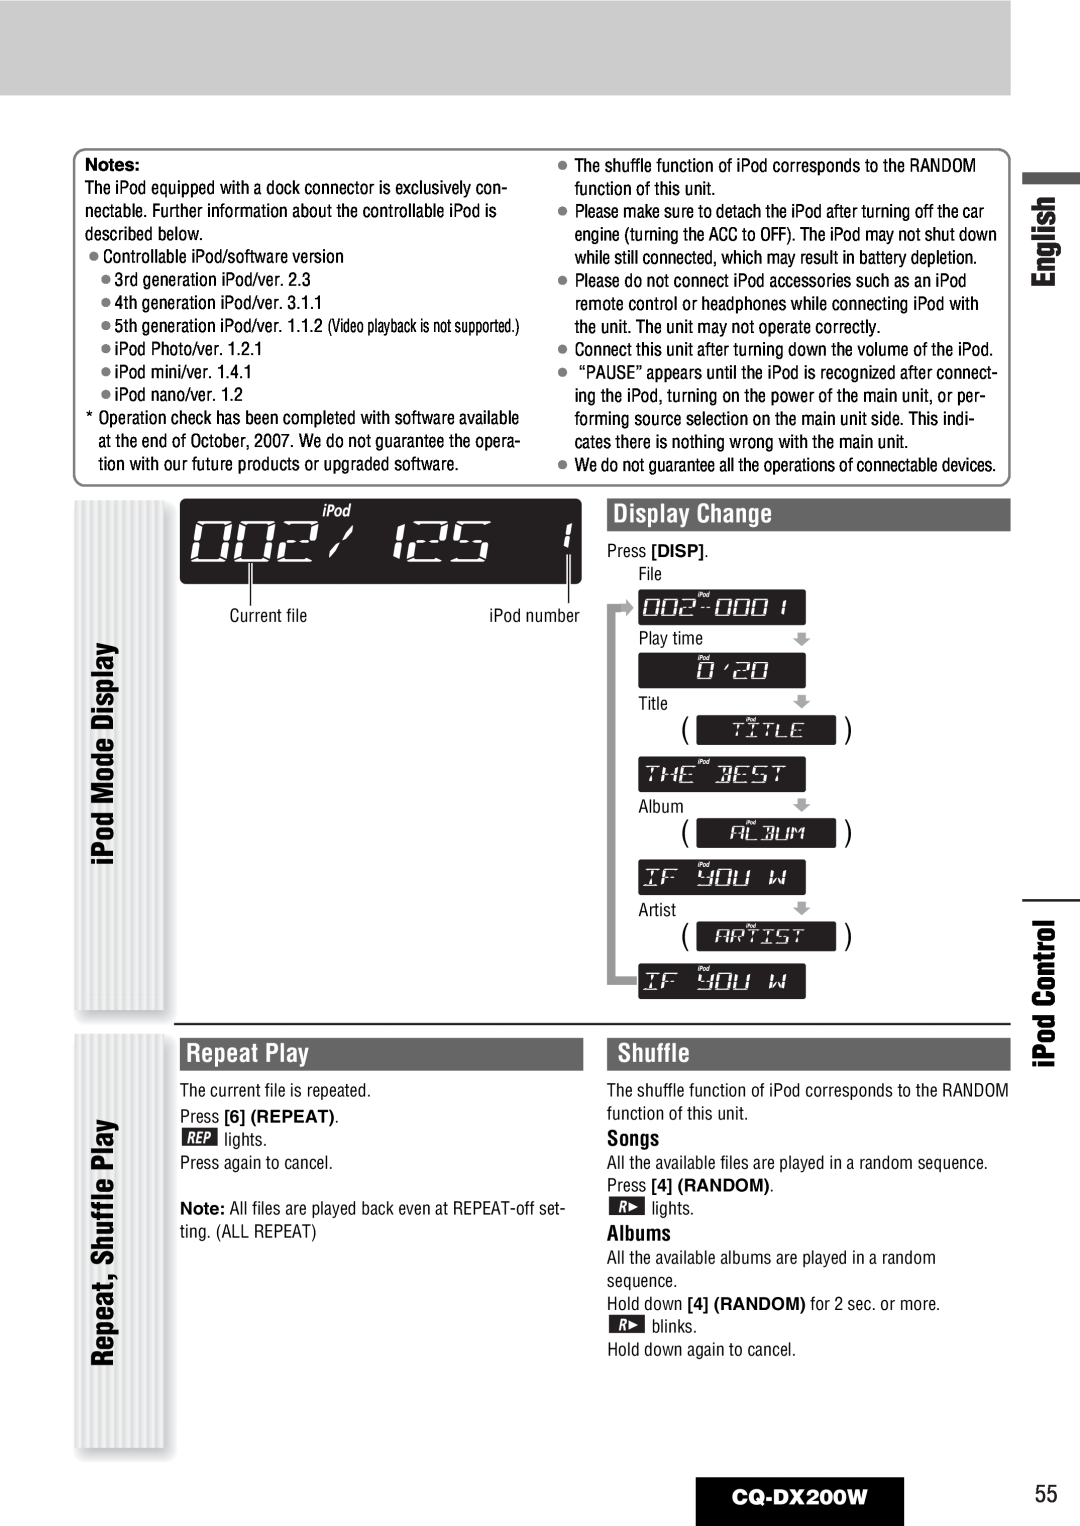 Panasonic CQ-DX200W manual iPod Mode Display, Control, Display Change, Repeat Play, Repeat, Shuffle, Songs, Albums 